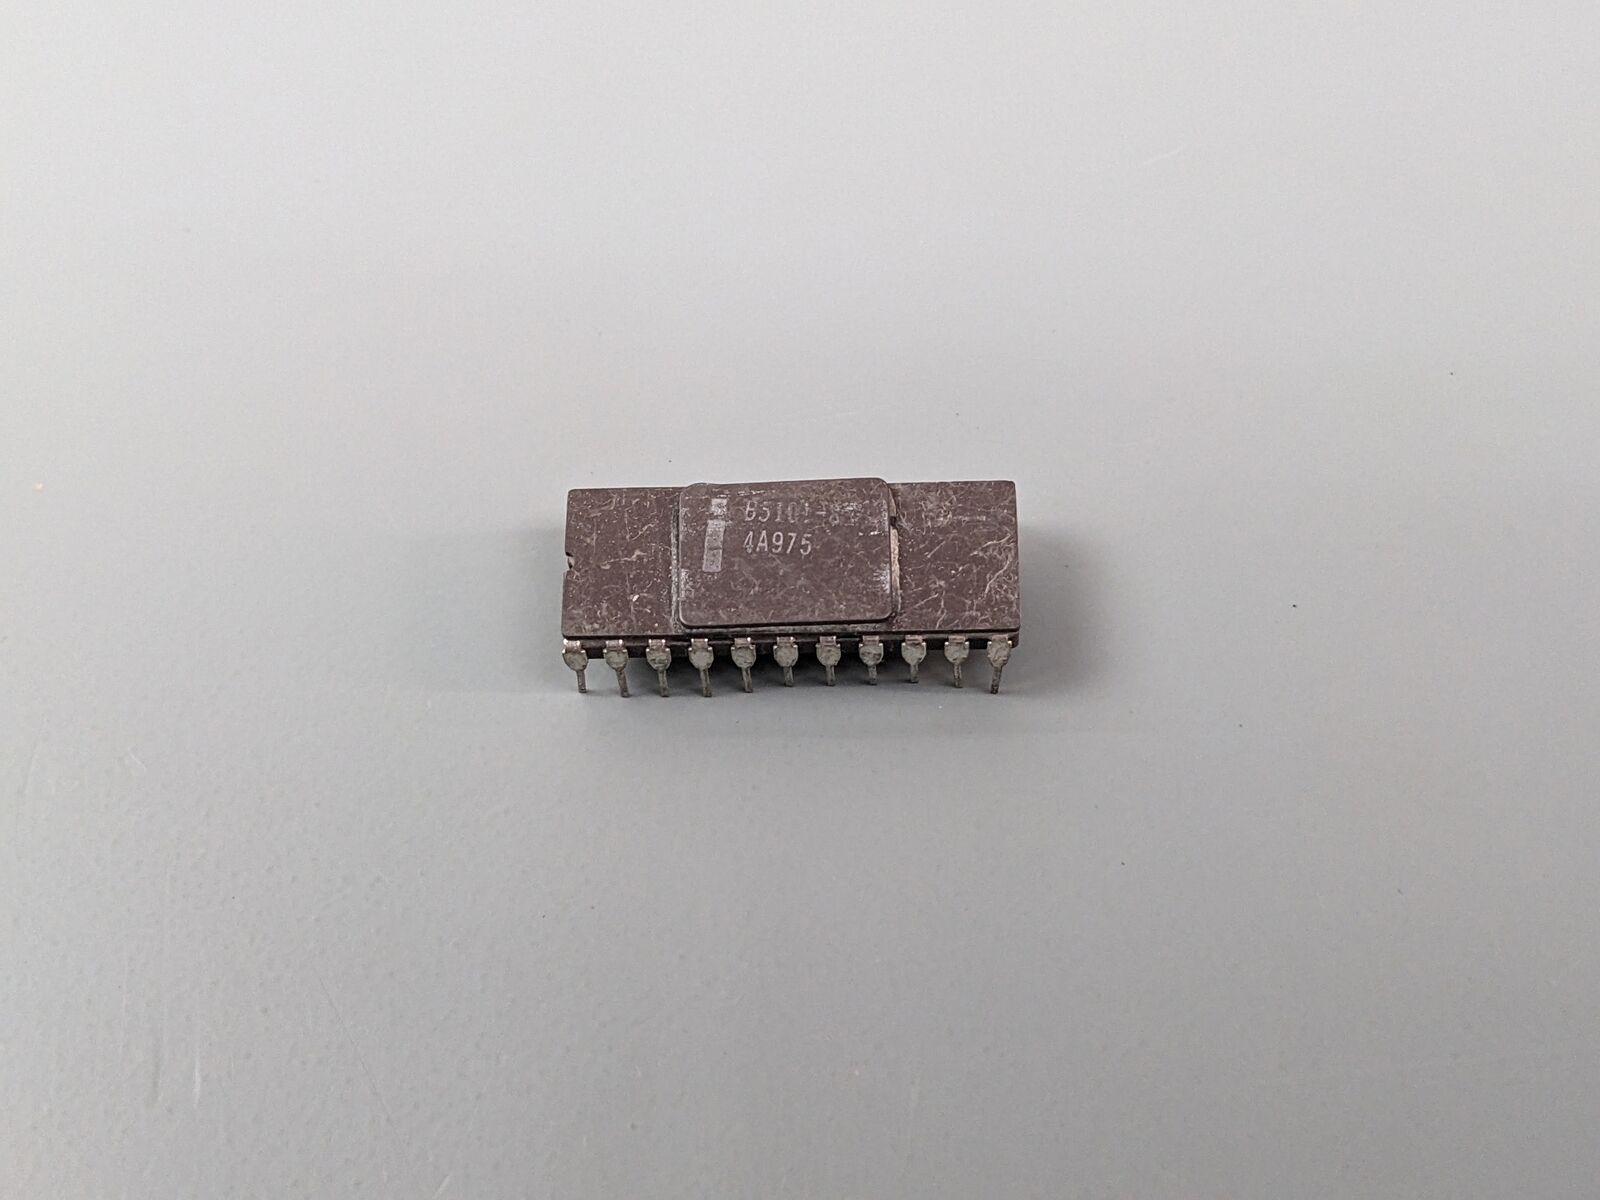 Intel B5101-8 256 x 4 (1024 Bit) SRAM Chip, RARE Vintage Ceramic - Fully Tested